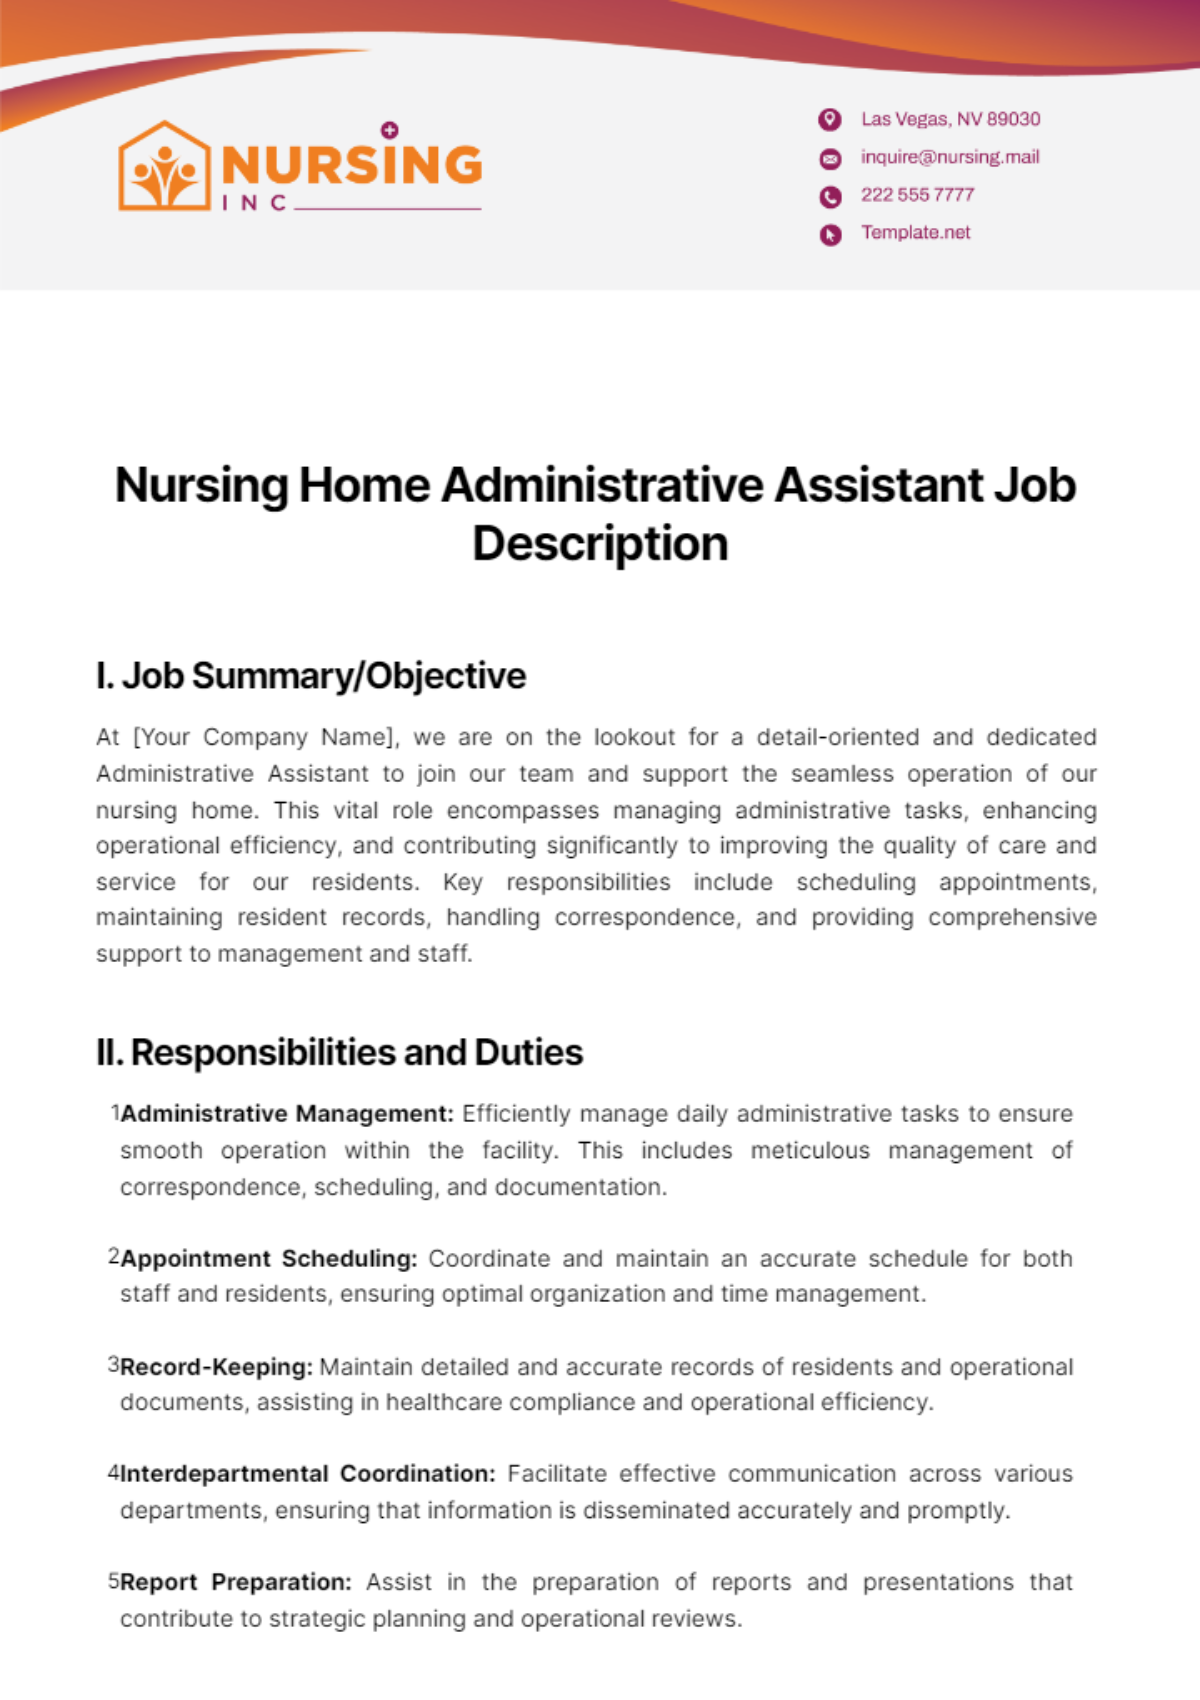 Nursing Home Administrative Assistant Job Description Template